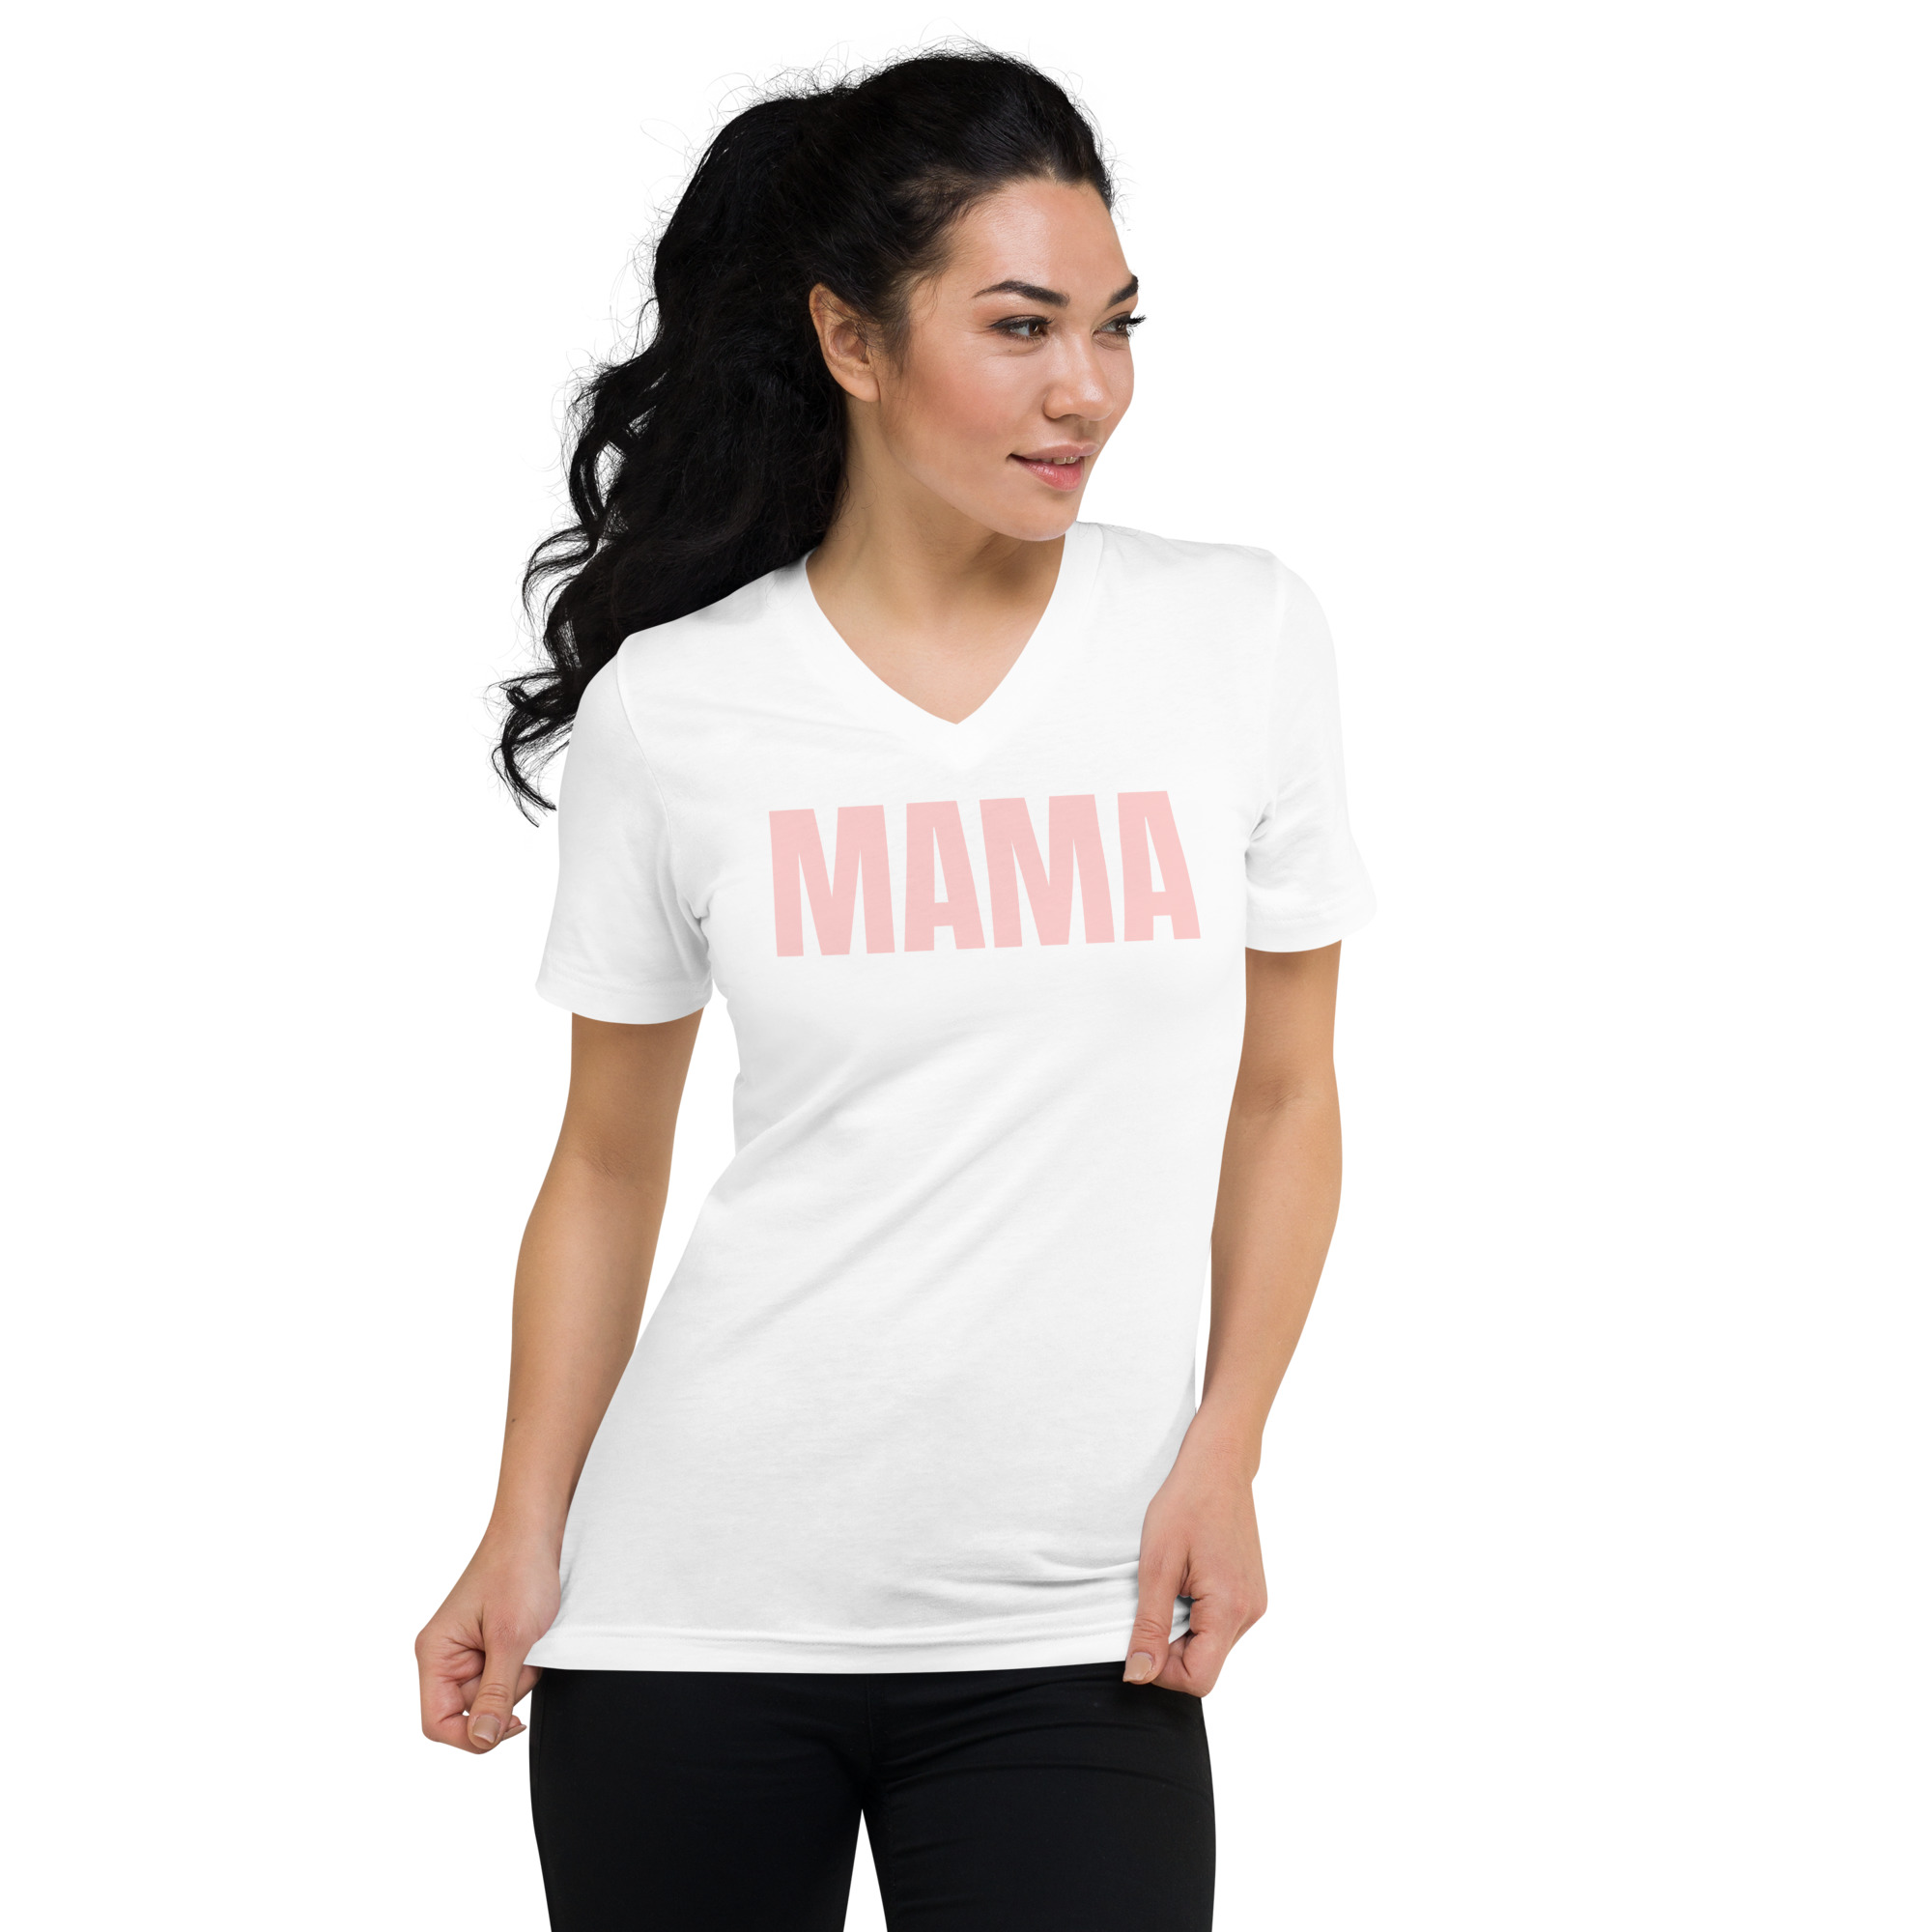 “MAMA” – Kurzärmeliges Unisex-T-Shirt mit V-Ausschnitt